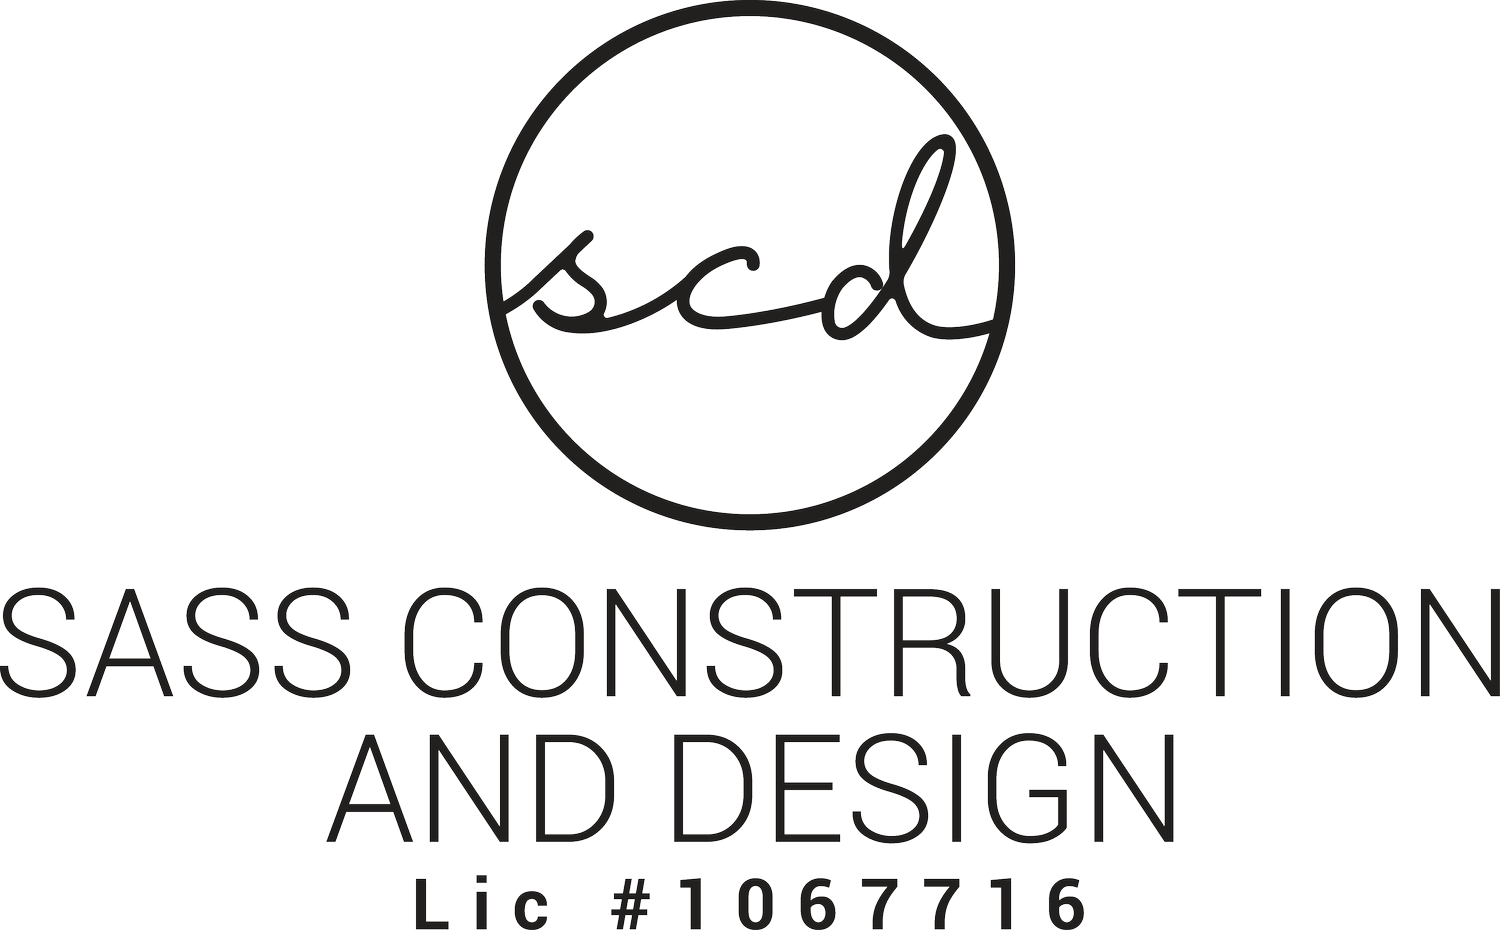 Sass Construction and Design